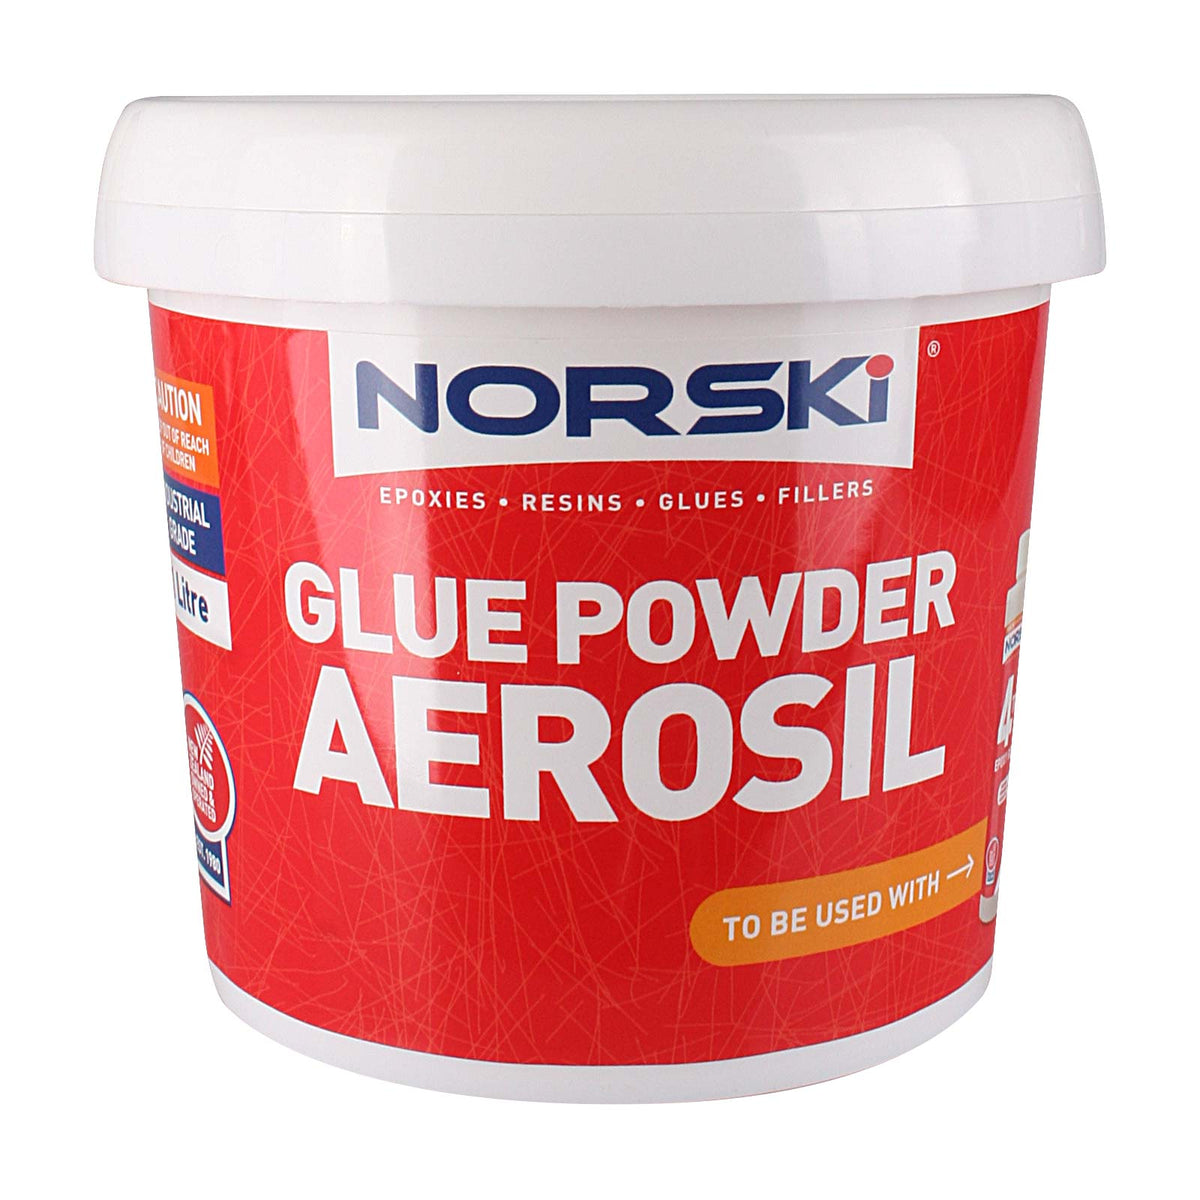 Norski Glue Powder  - Aerosil